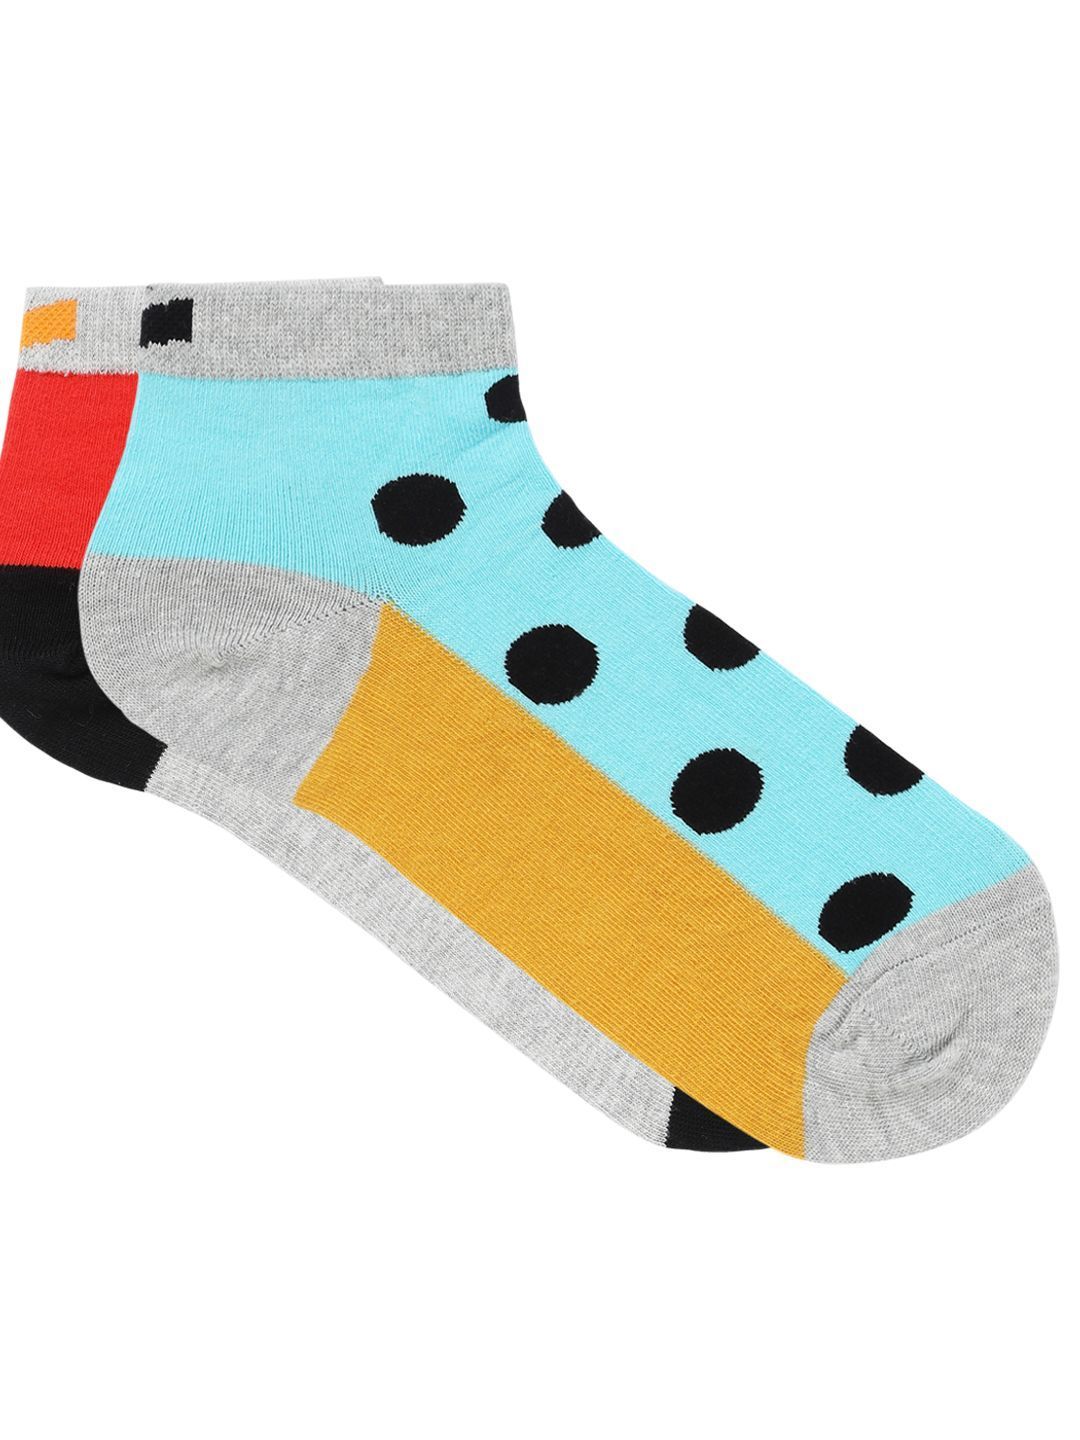 Men's Reuben Po2 In Regular Socks